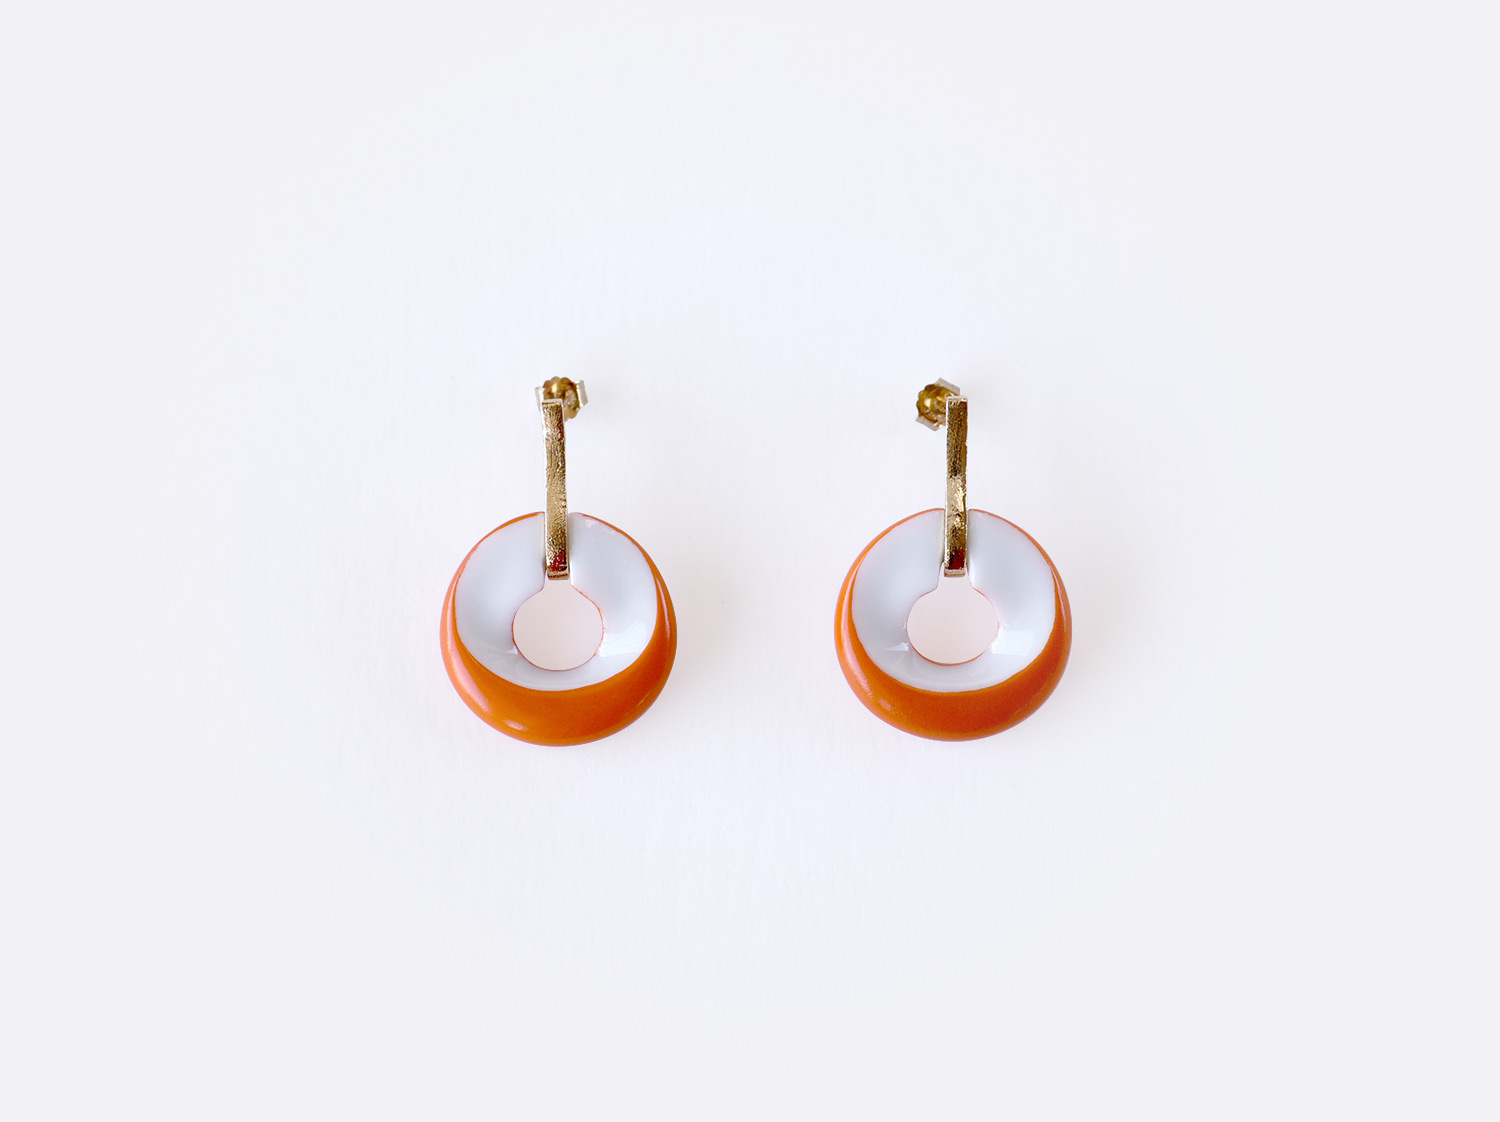 China Earrings of the collection ALBA ORANGE | Bernardaud